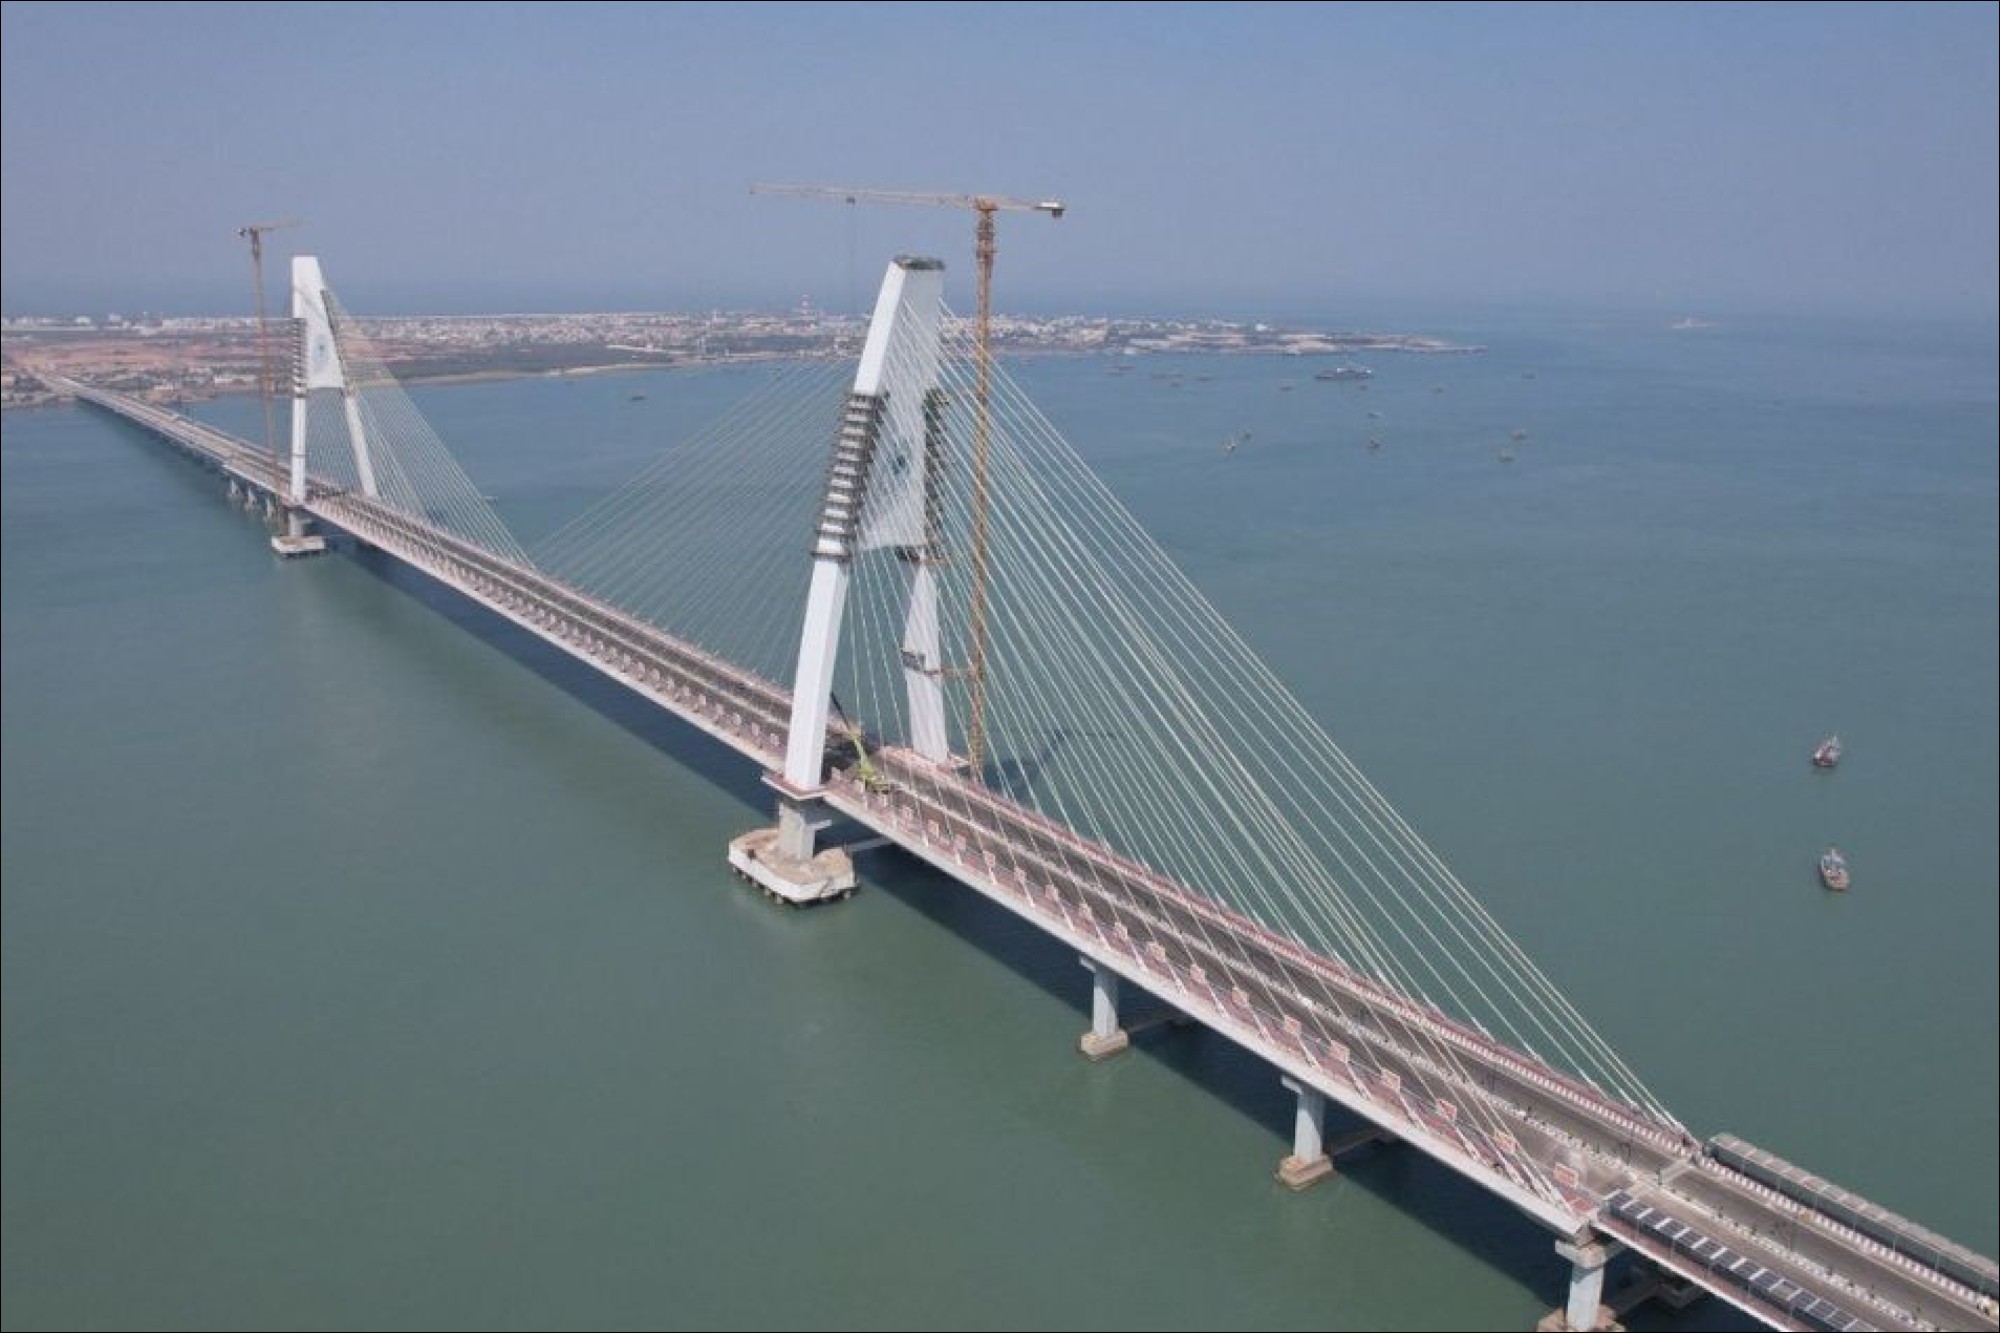 Prime Minister Narendra Modi has officially opened India's longest cable-stayed bridge, the 'Sudarshan Setu', linking Okha with Beyt Dwarka island in Gujarat.